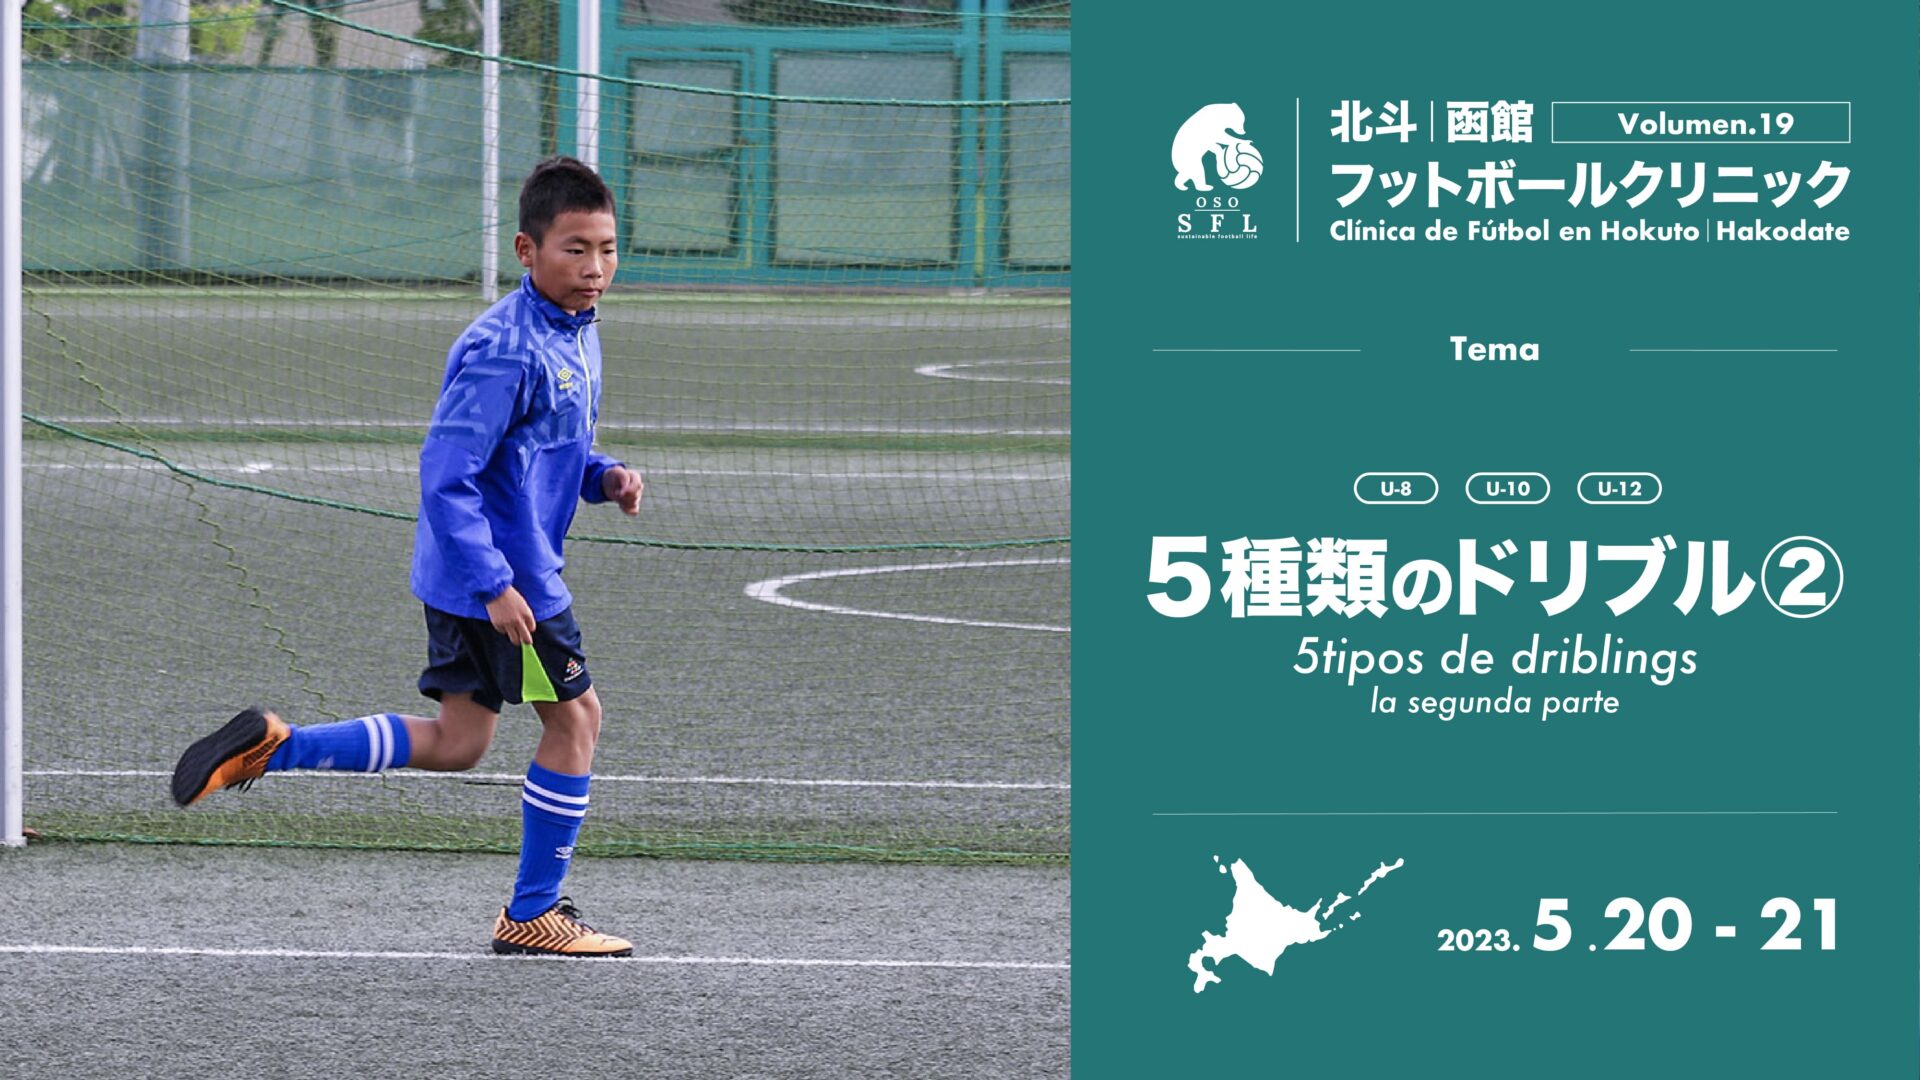 20230502_notice-hokuto-hakodate-football-clinic-2023-vol19-1920px